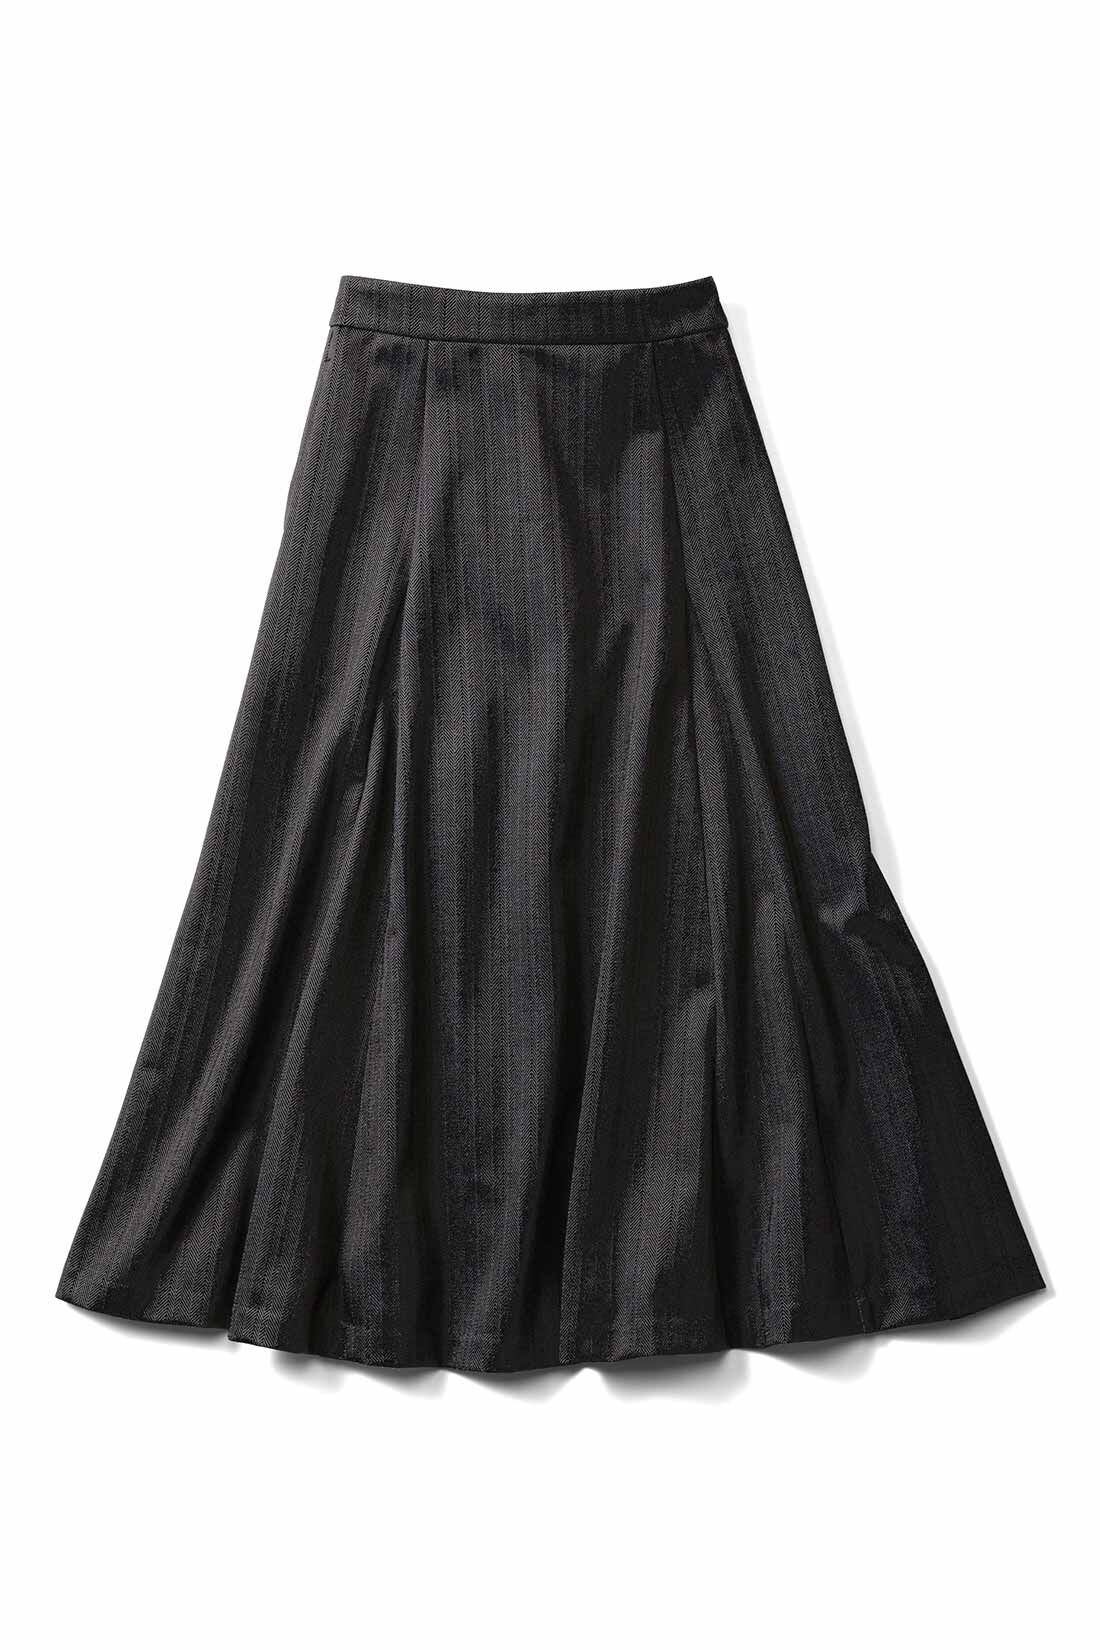 IEDIT|IEDIT[イディット]　シルエットが美しい 着映えフレアースカート|〈ダークグレー〉サイドファスナー付き。